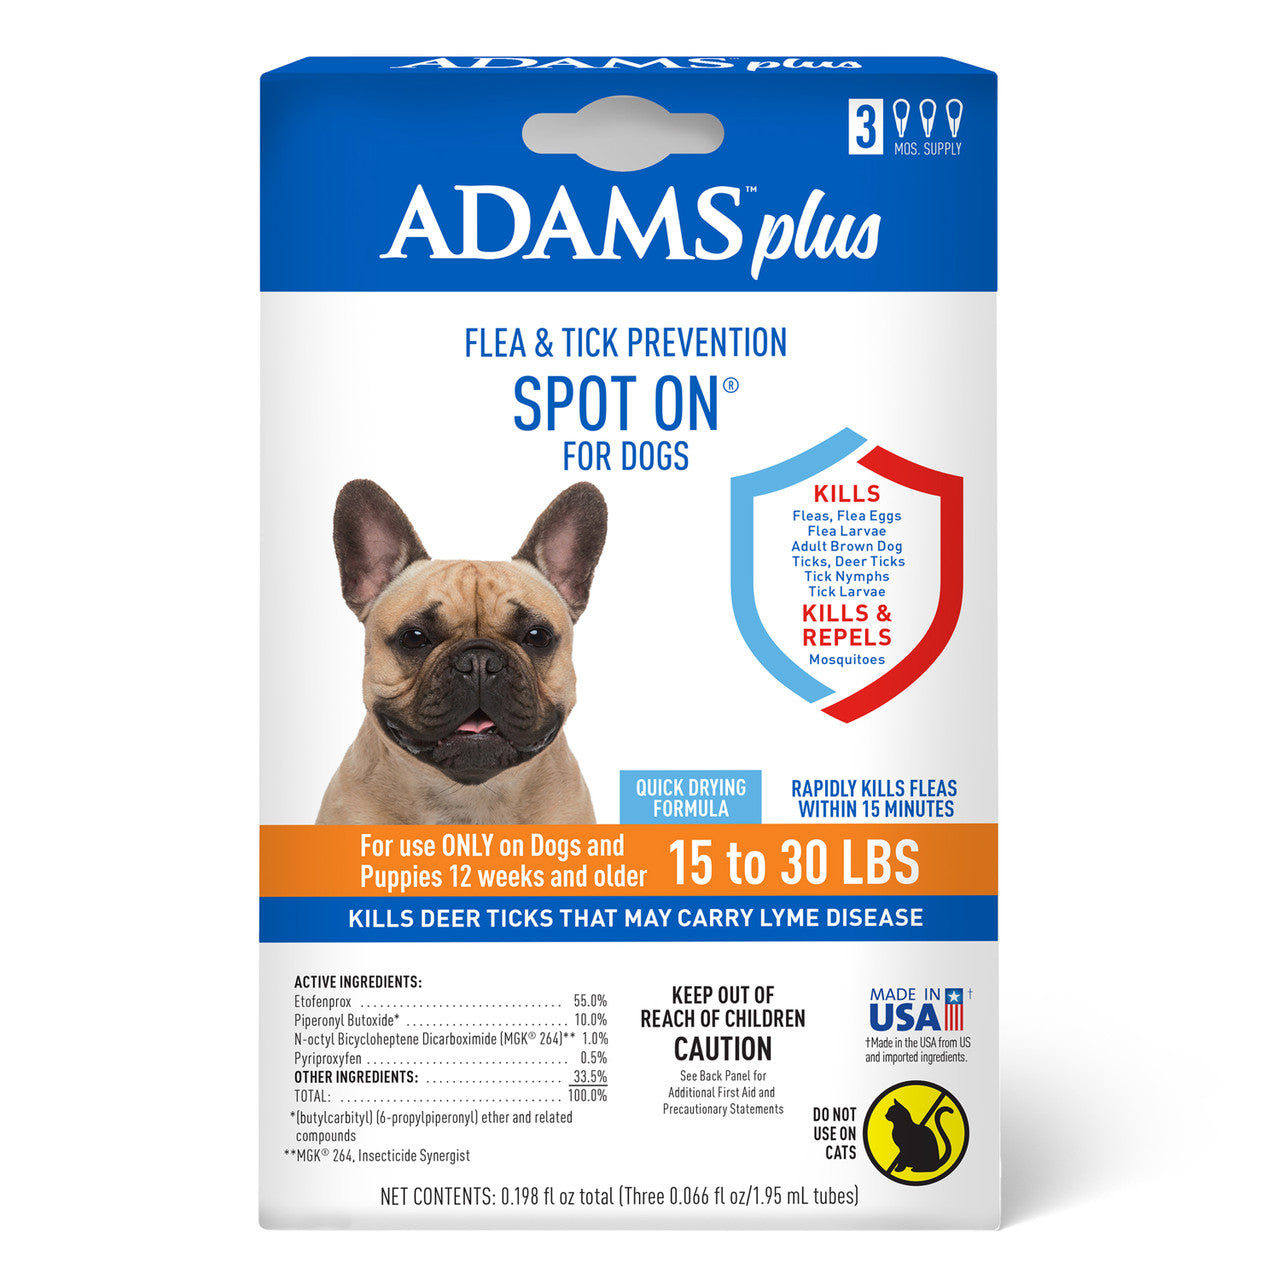 Adams Plus Flea & Tick Prevention Spot On for Dogs, Medium Dogs 15 to 30 lbs